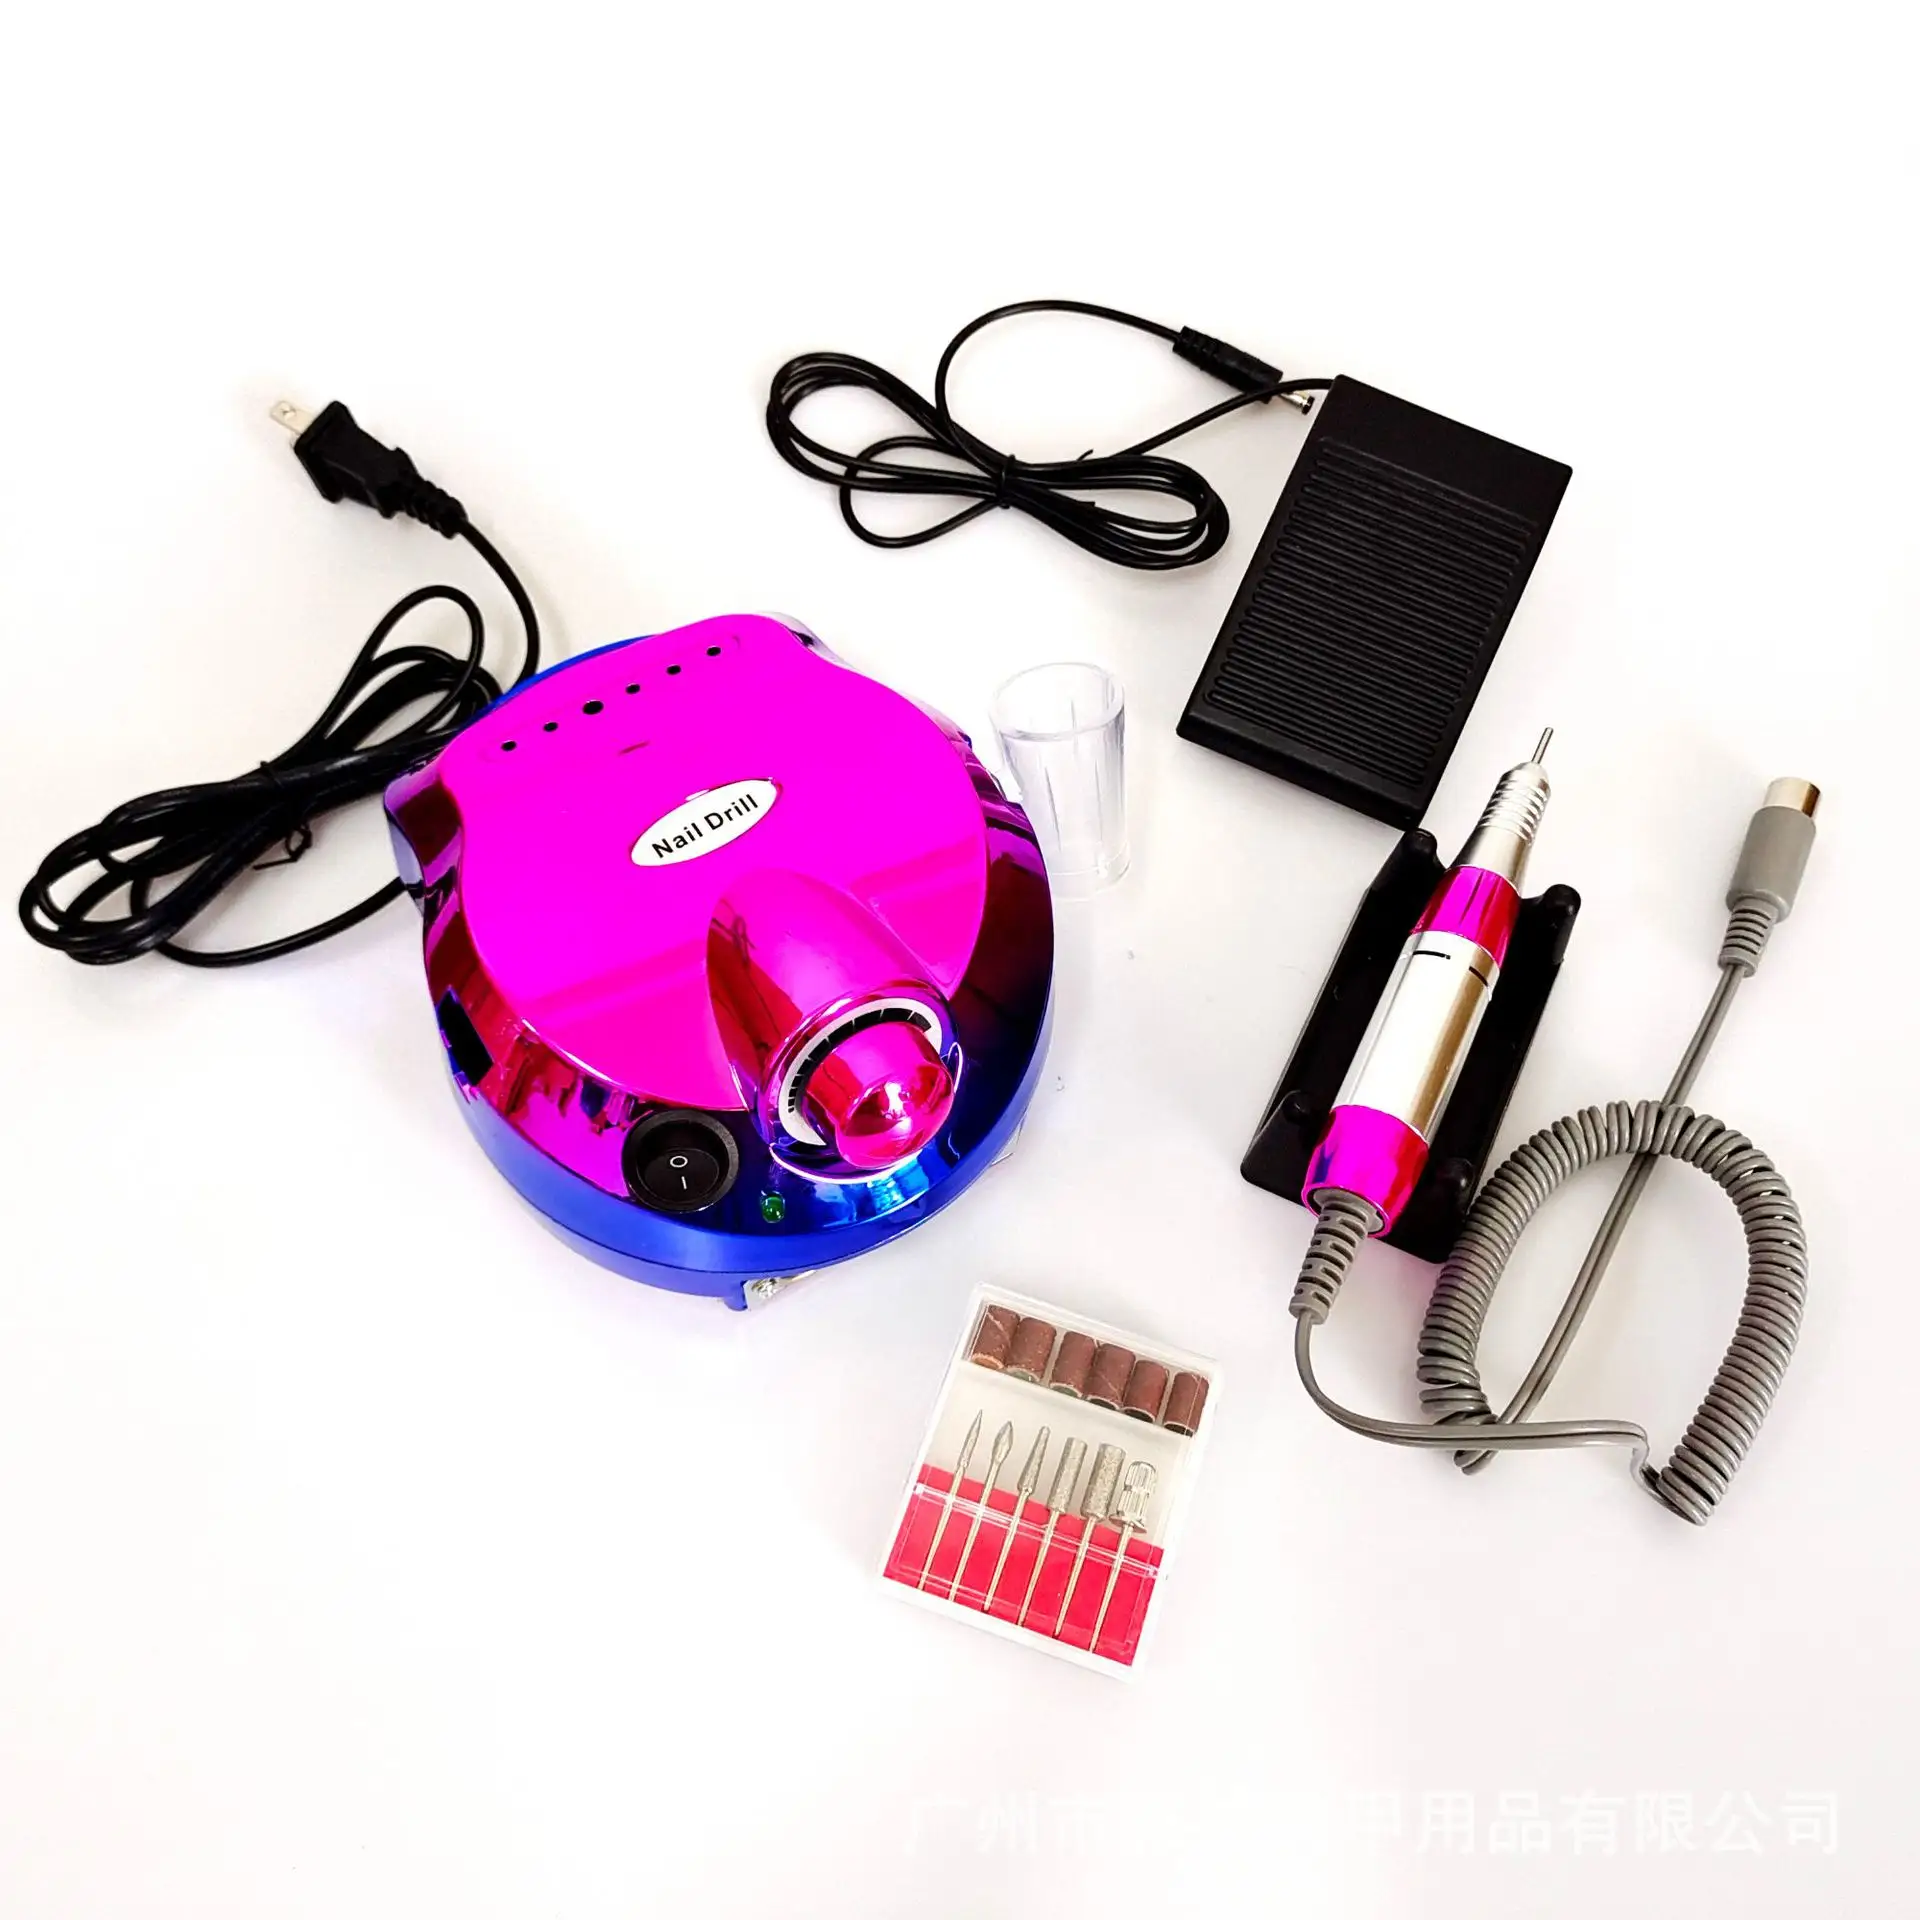 OEM ODM-pulidora eléctrica para uñas, máquina de pulido de DM-202, gradiente de color rosa, 35000RPM